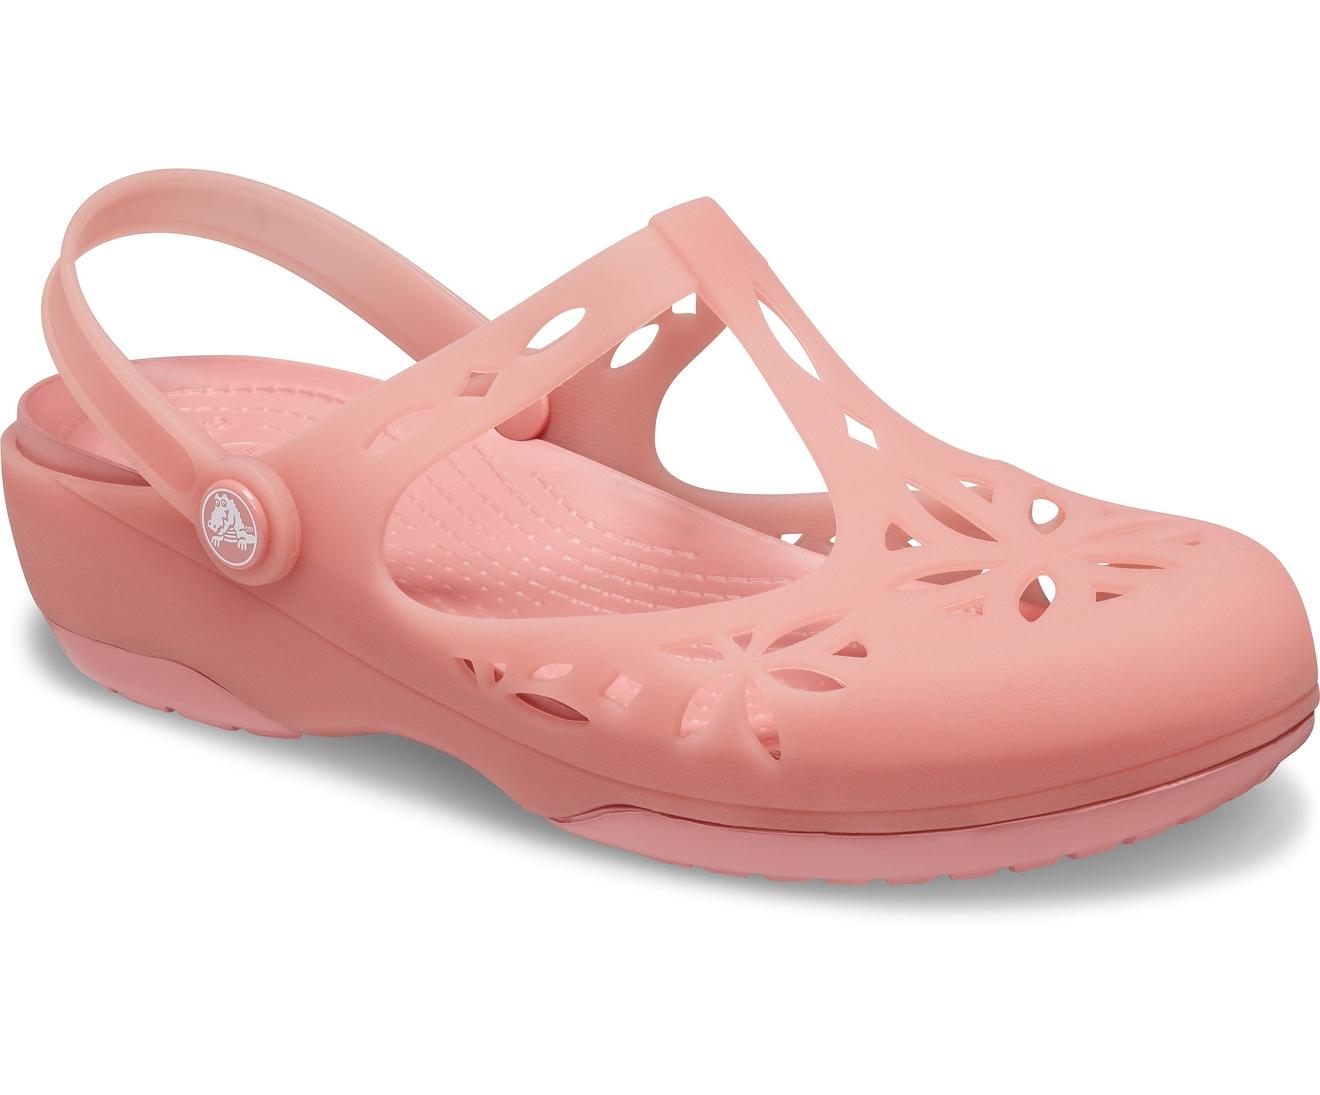 Crocs™ Isabella Clog in Pink | Lyst